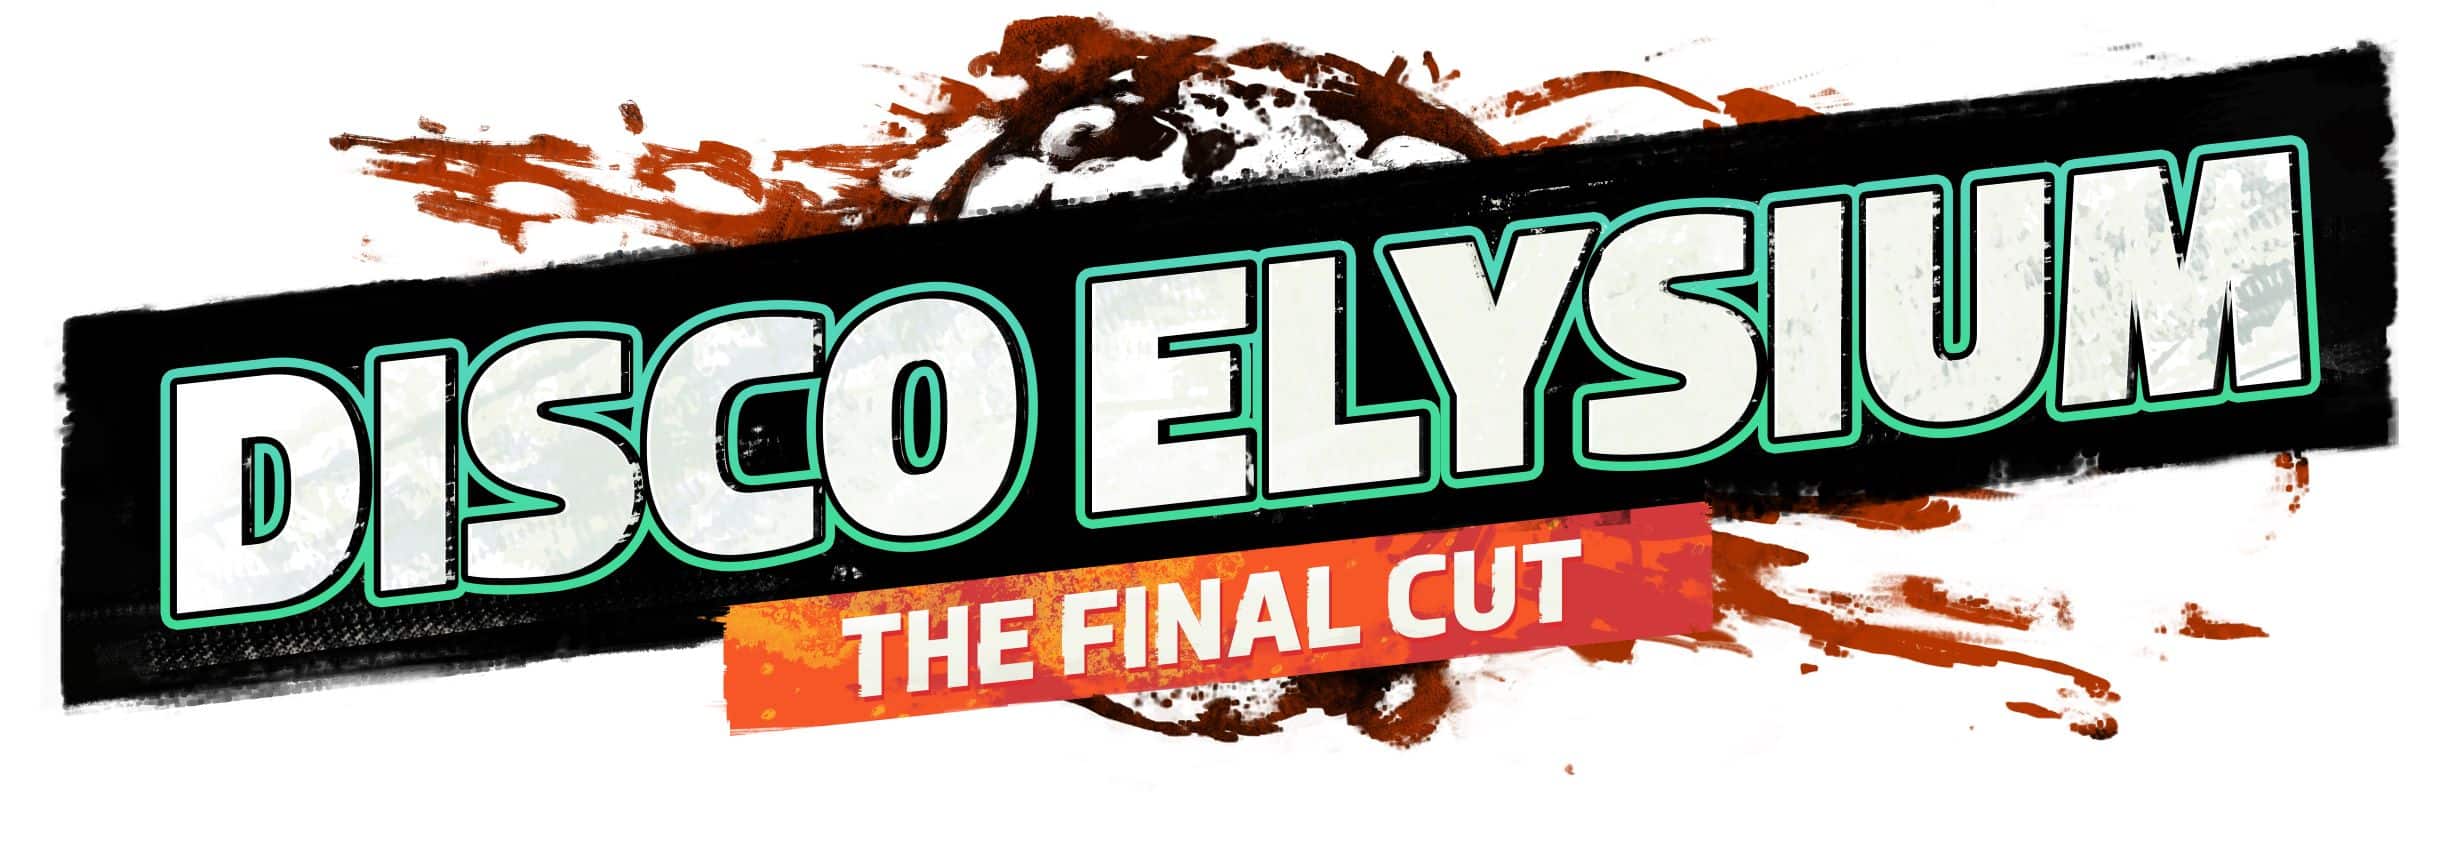 Disco Elysium Final Cut Logo